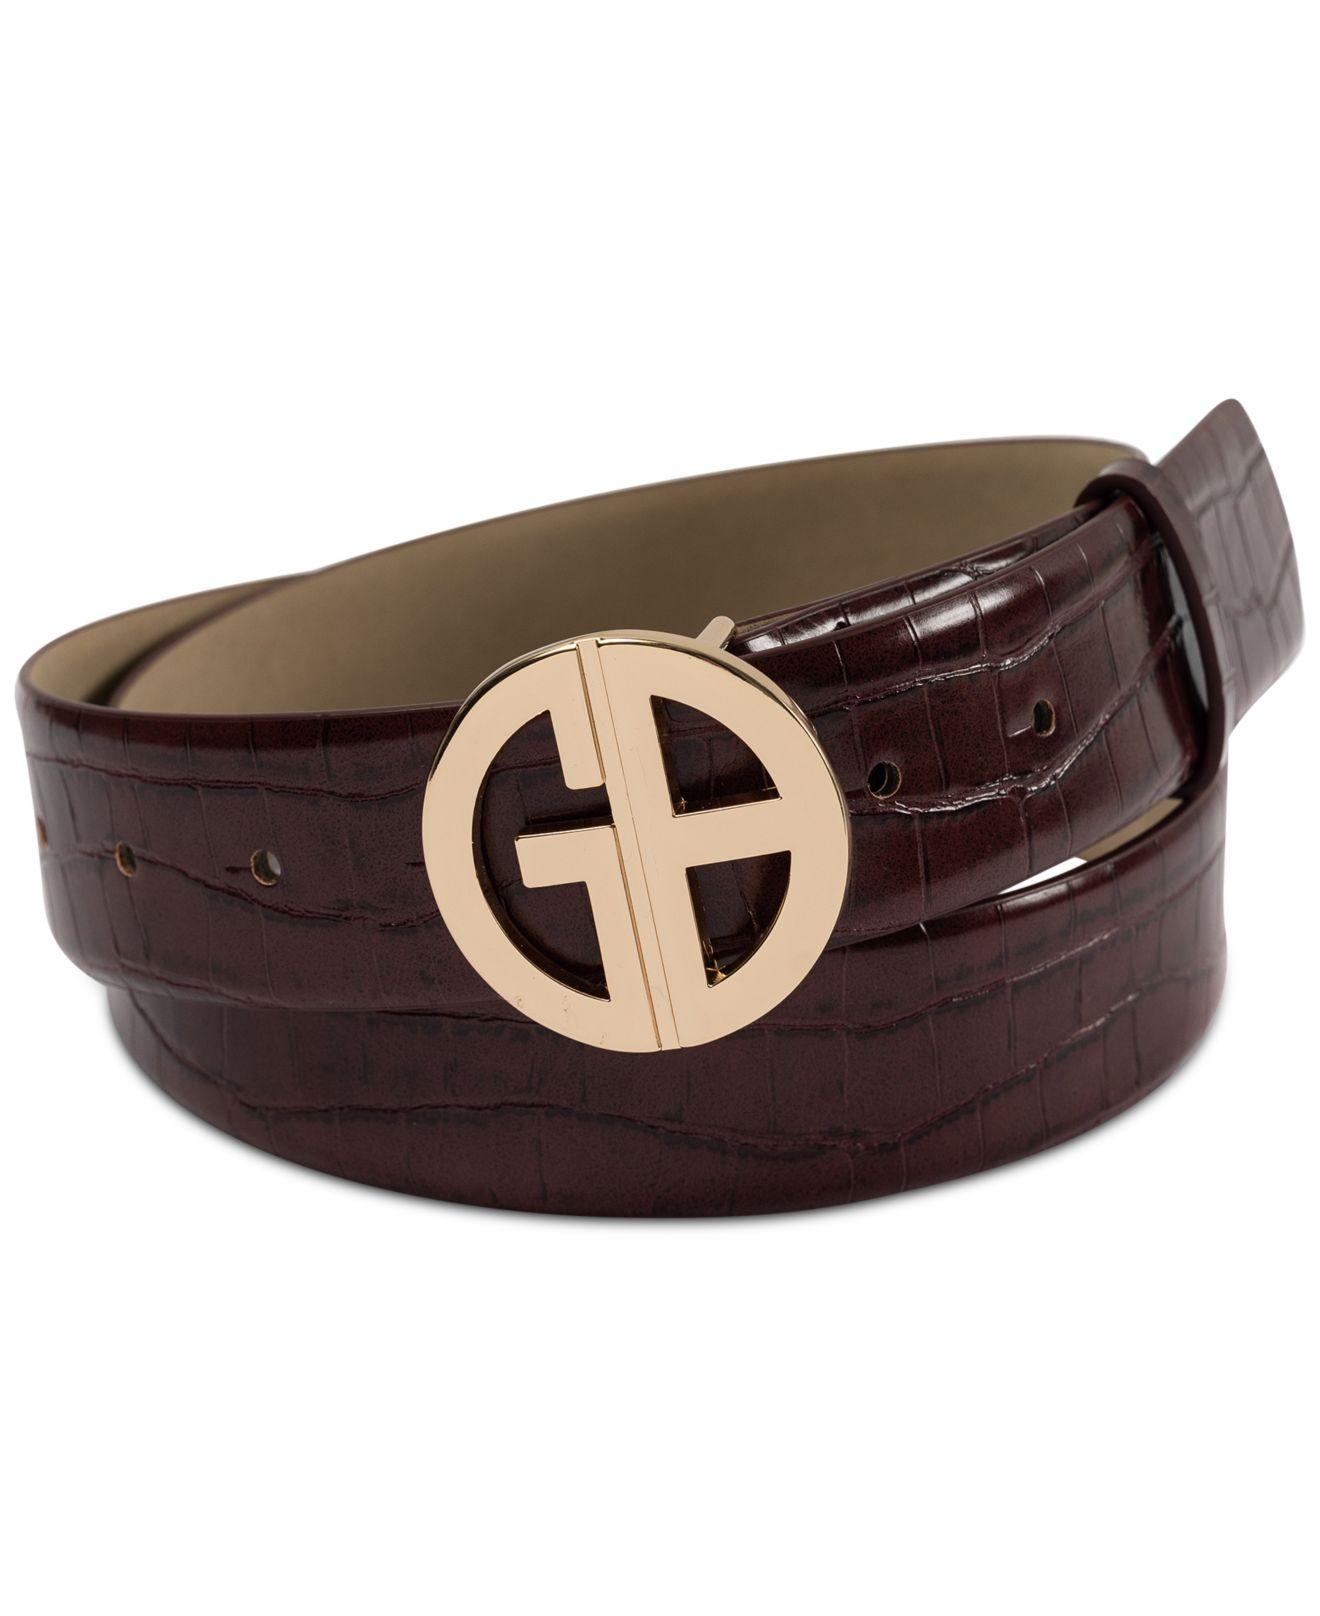 Giani Bernini Softy Grab & Go Leather Wristlet, Created For Macy's